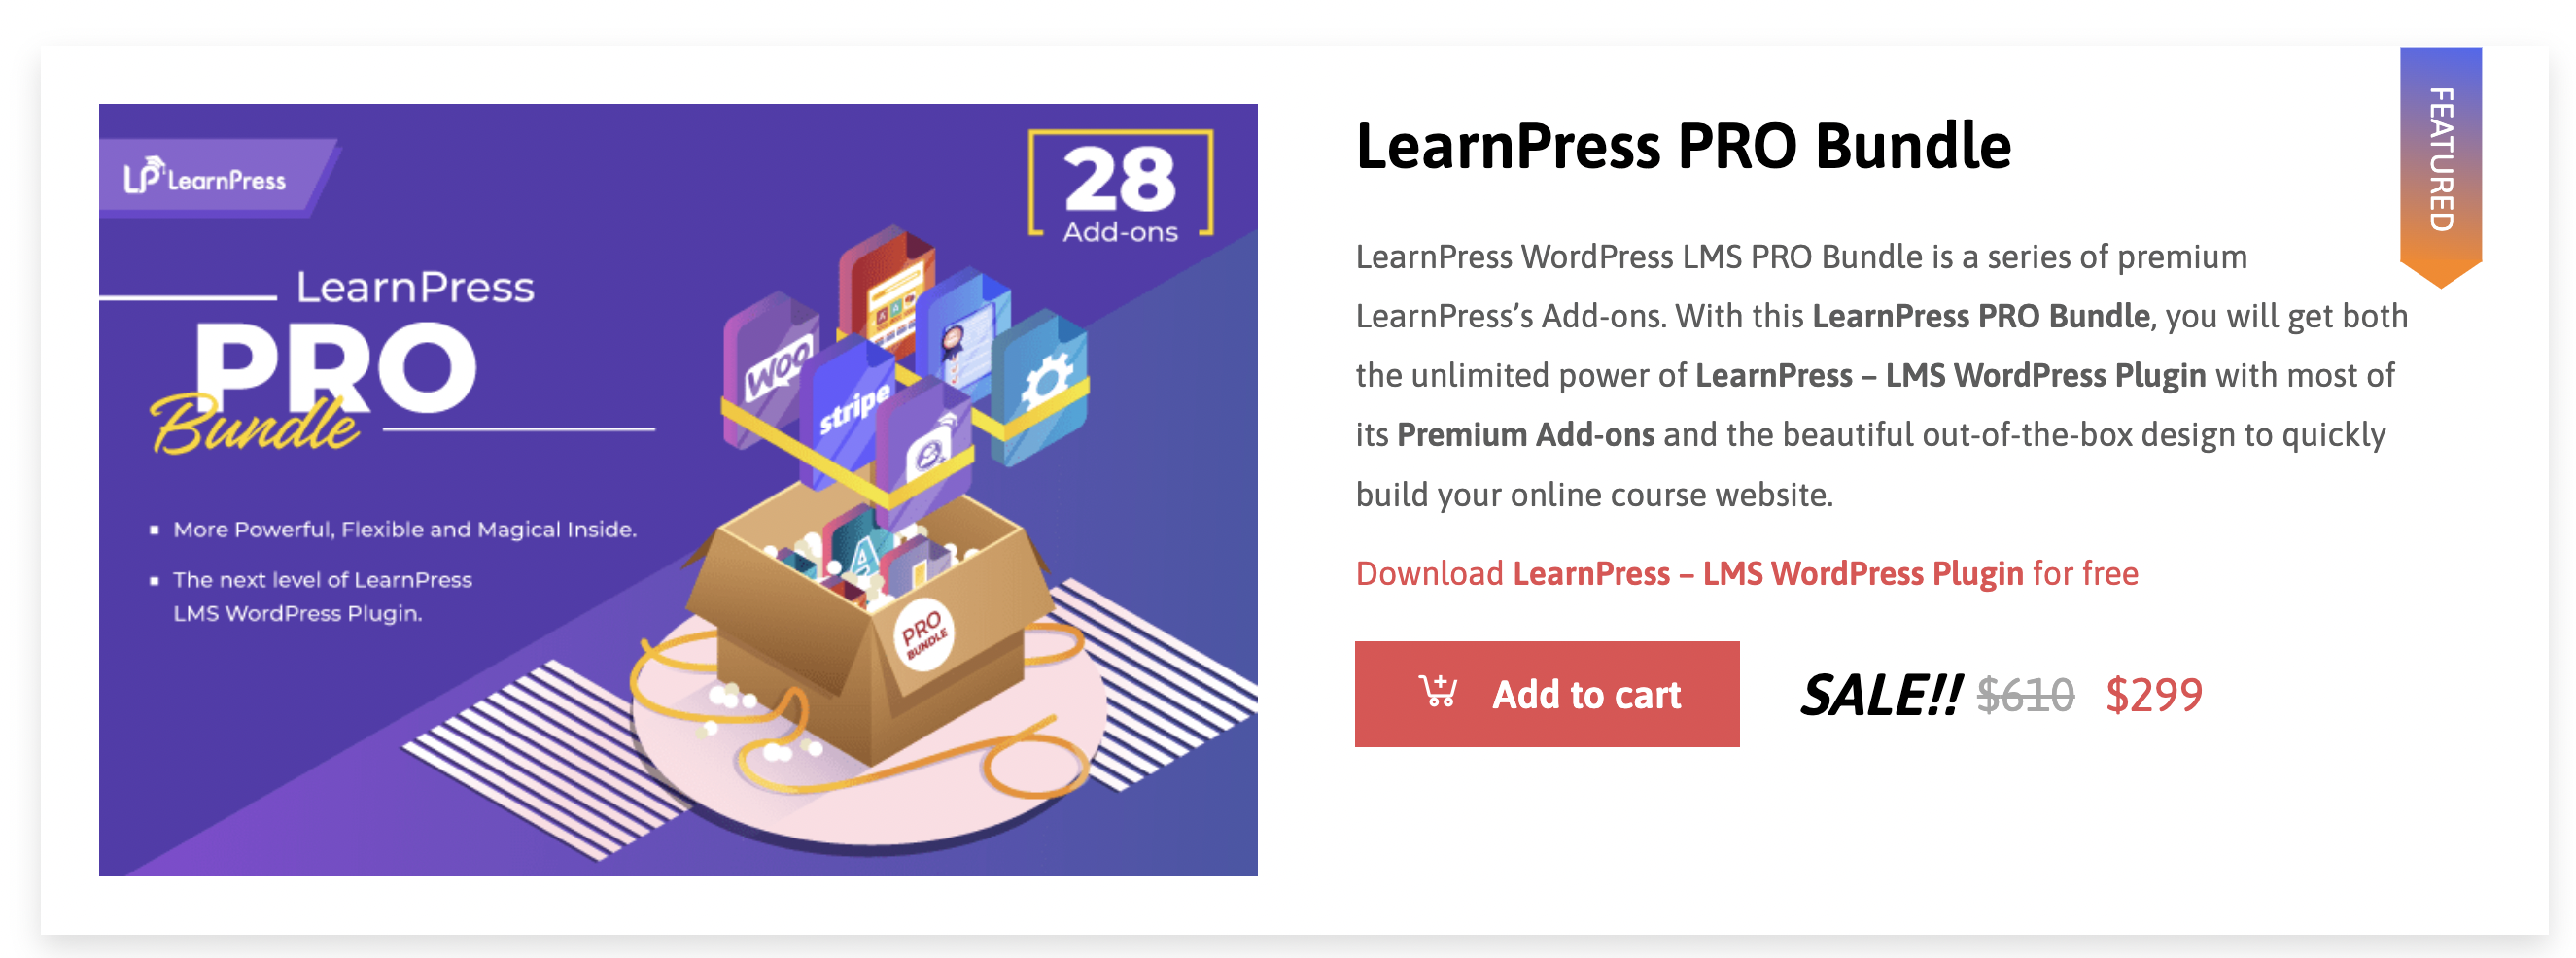 LearnPress pricing